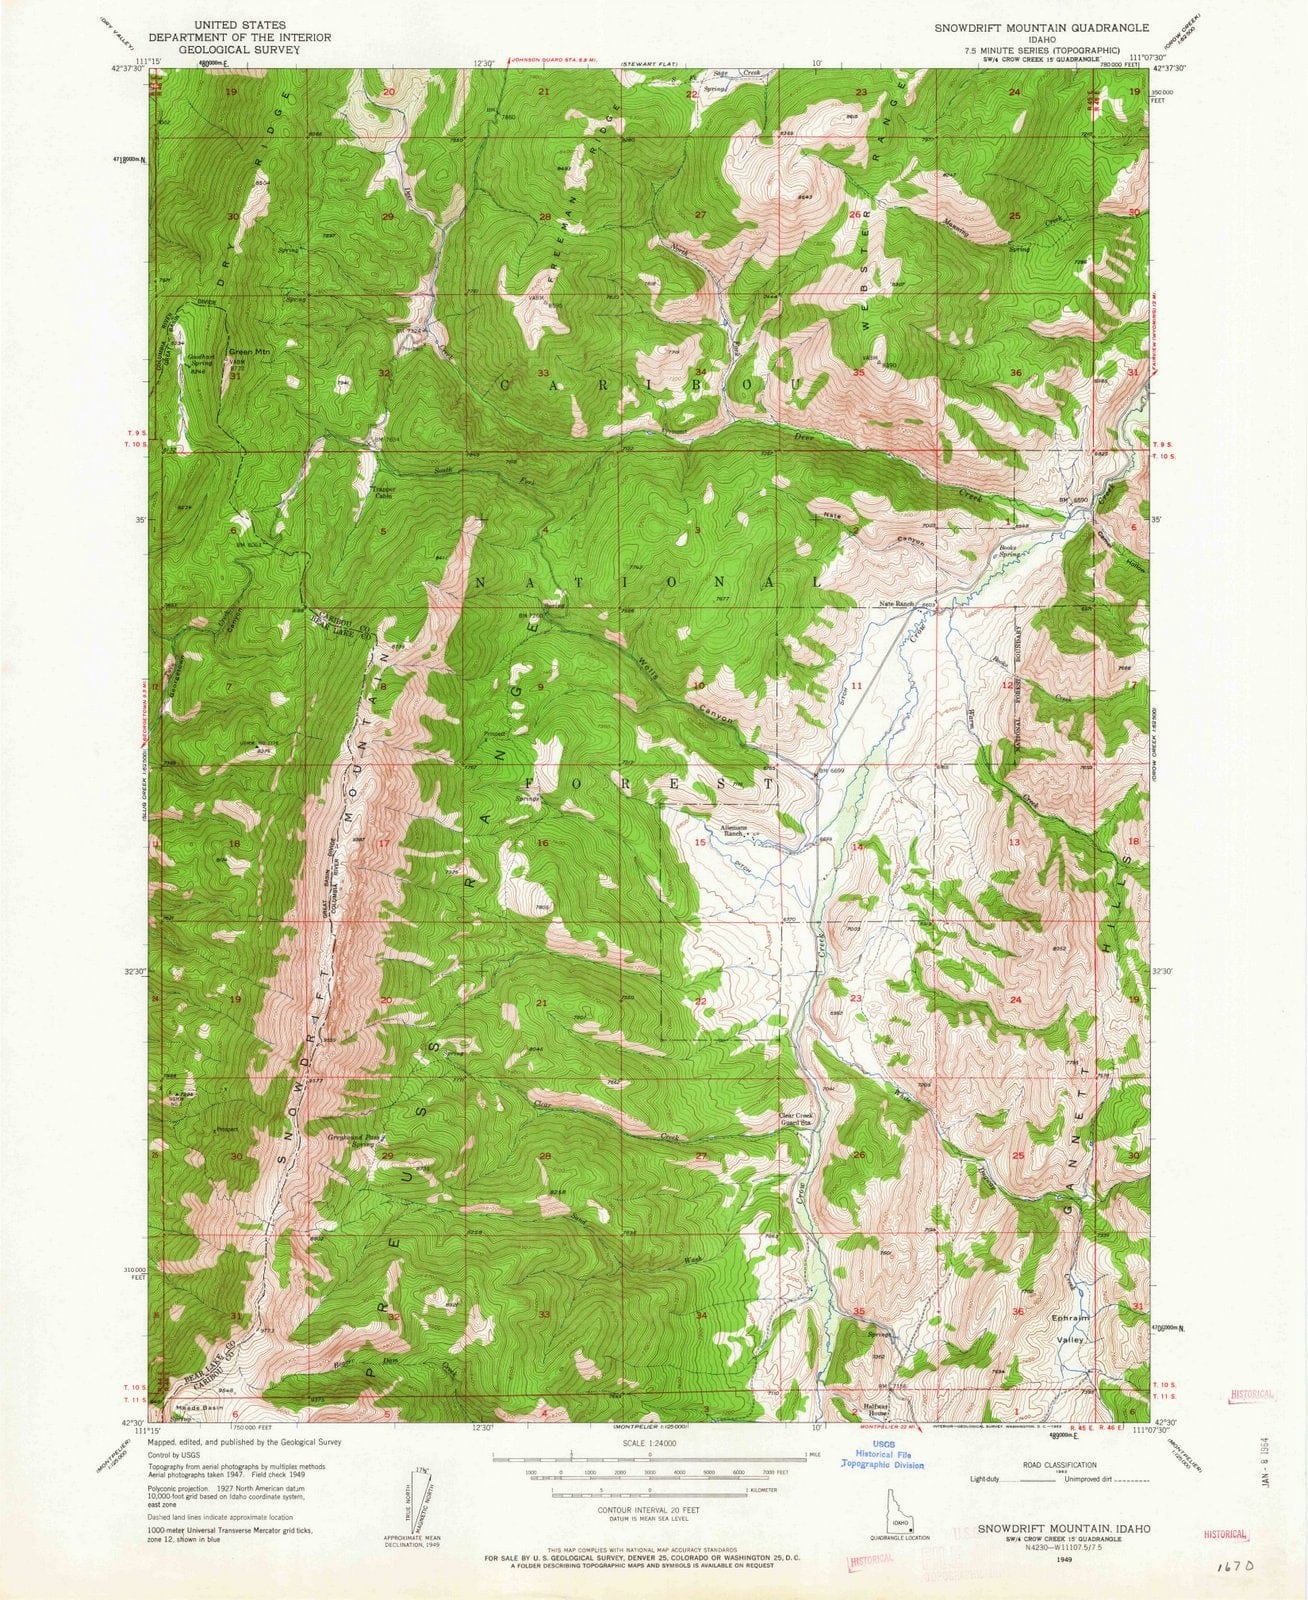 1949 Snowdrift Mountain, ID - Idaho - USGS Topographic Map